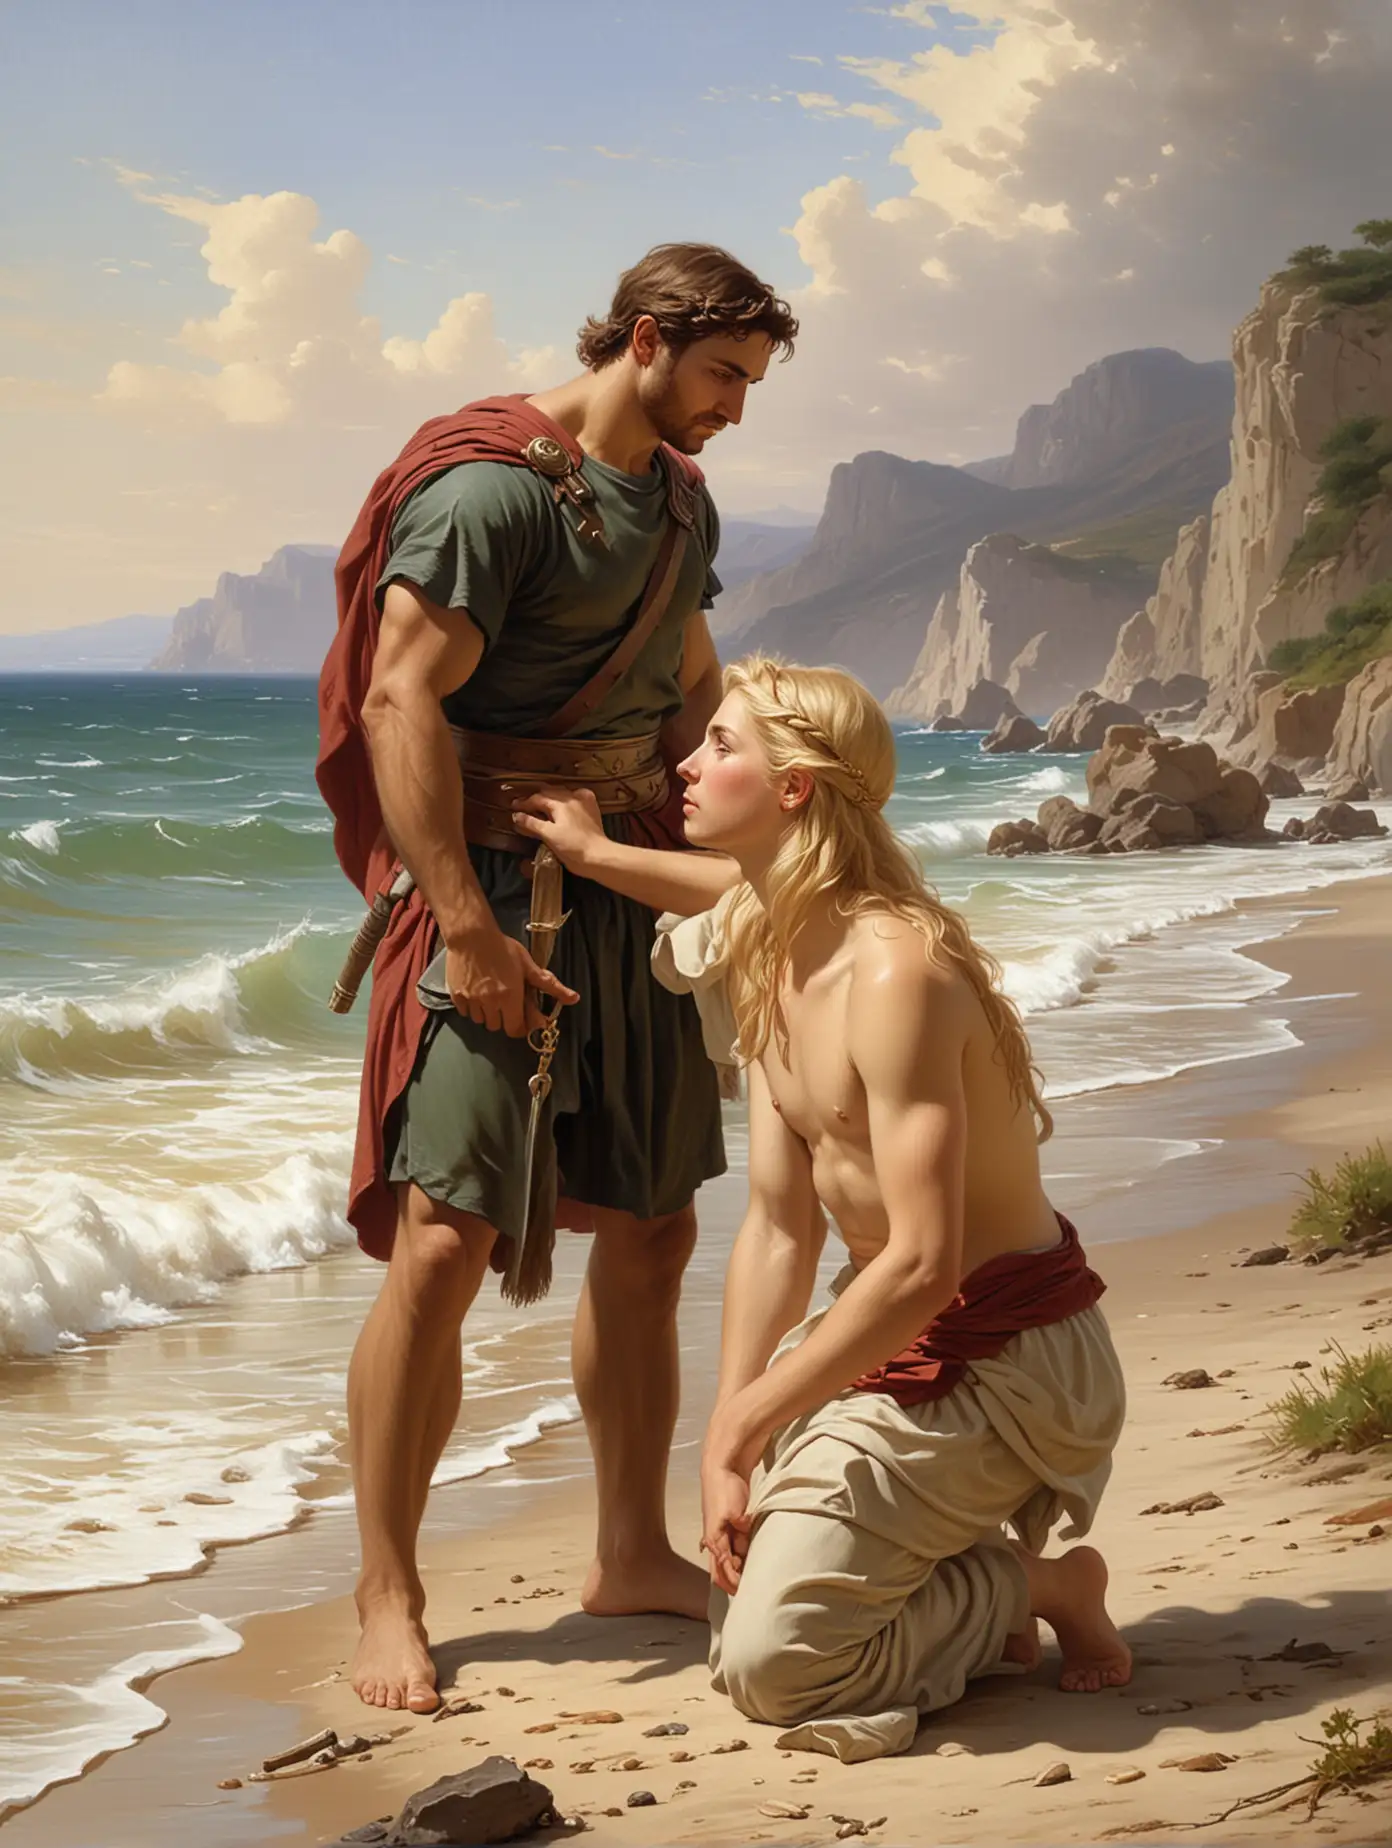 Achilles Returning Blond Boy to Mother on Seashore Bouguereau Style Art